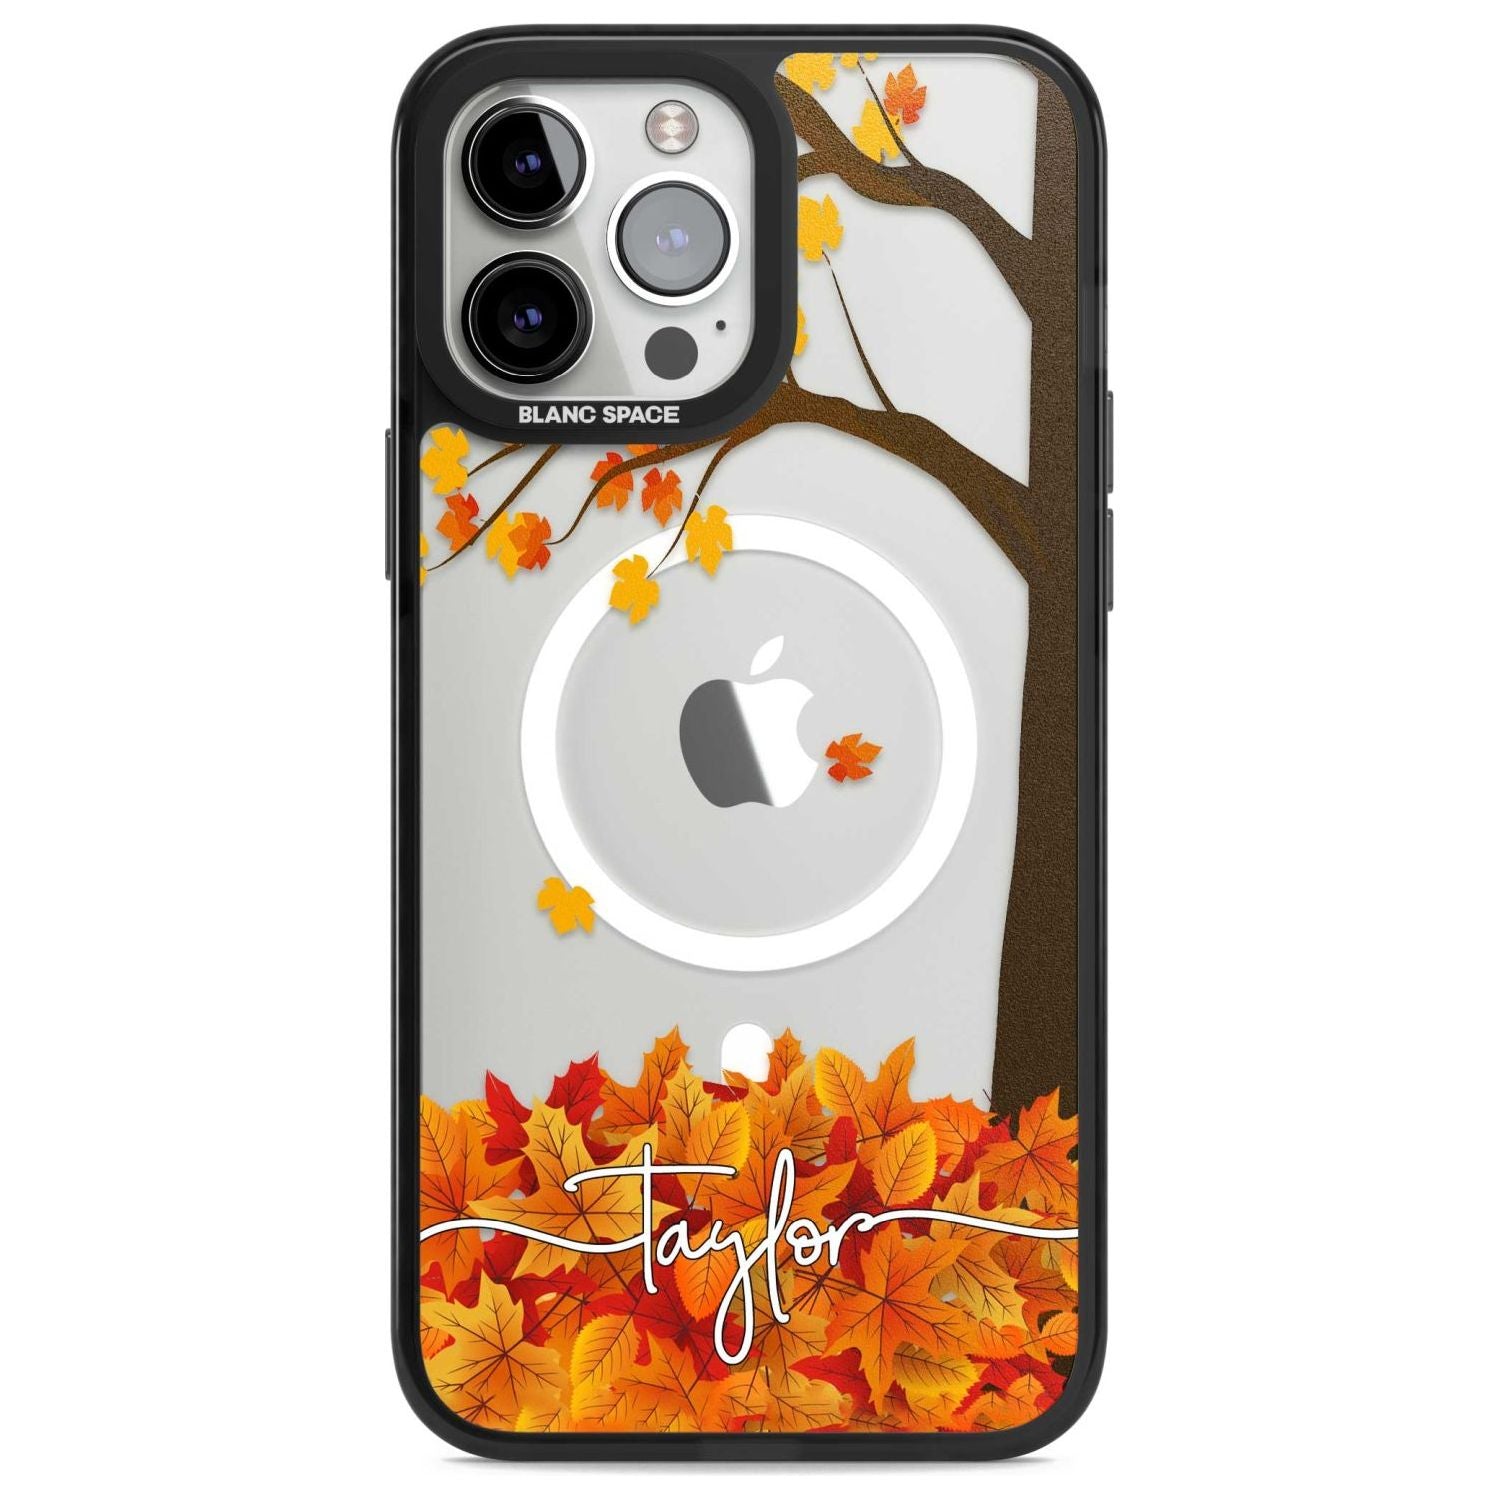 Personalised Autumn Leaves Custom Phone Case iPhone 13 Pro Max / Magsafe Black Impact Case Blanc Space